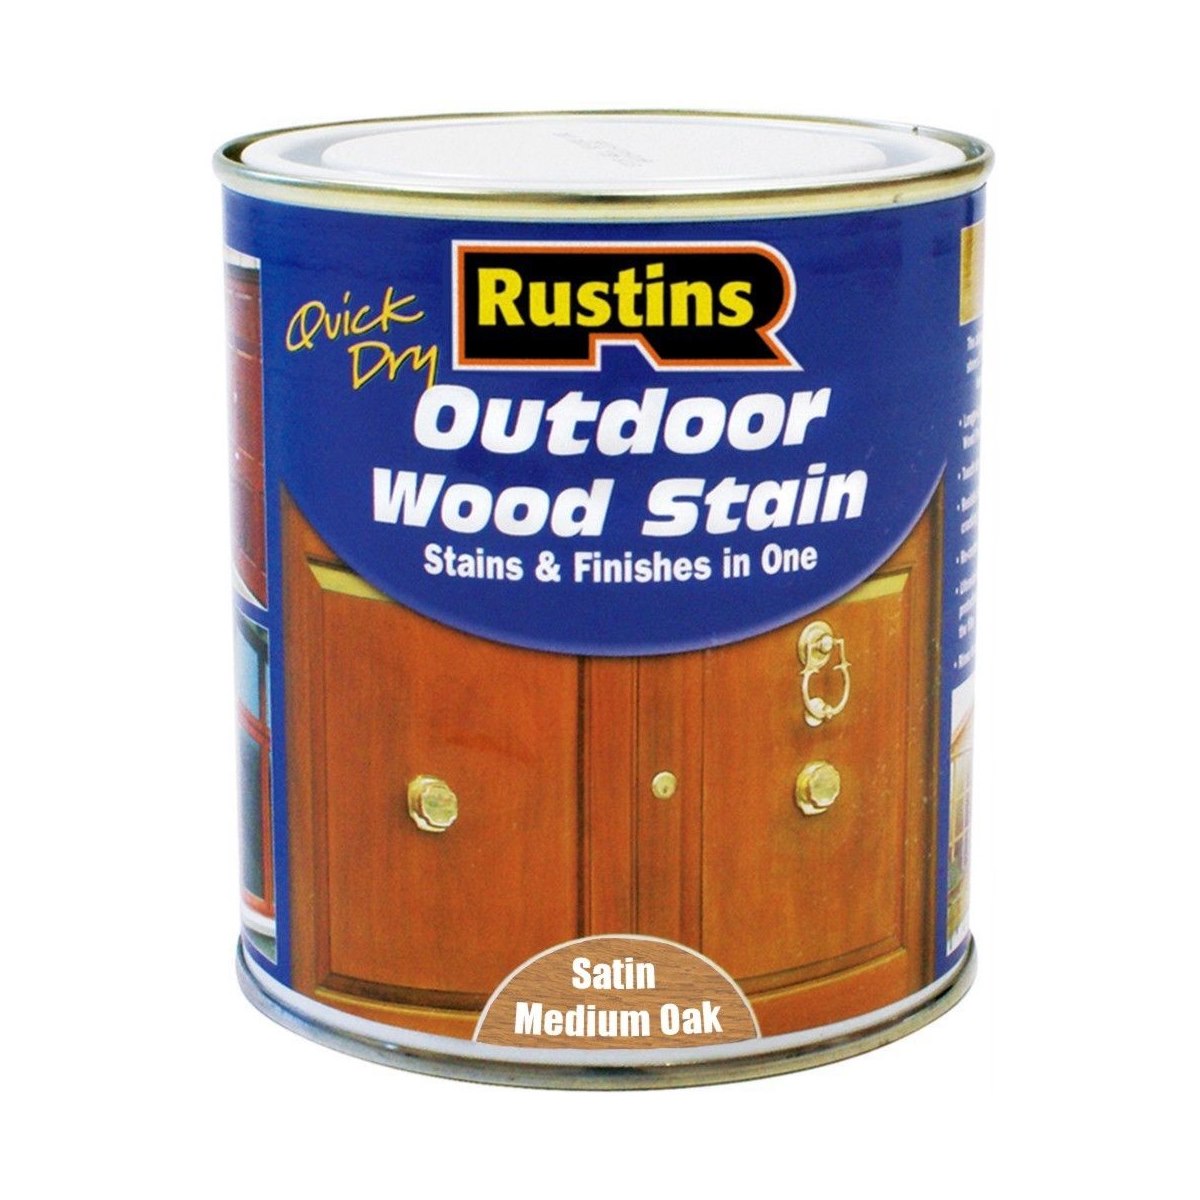 Rustins Quick Dry Outdoor Wood Stain Medium Oak 500ml